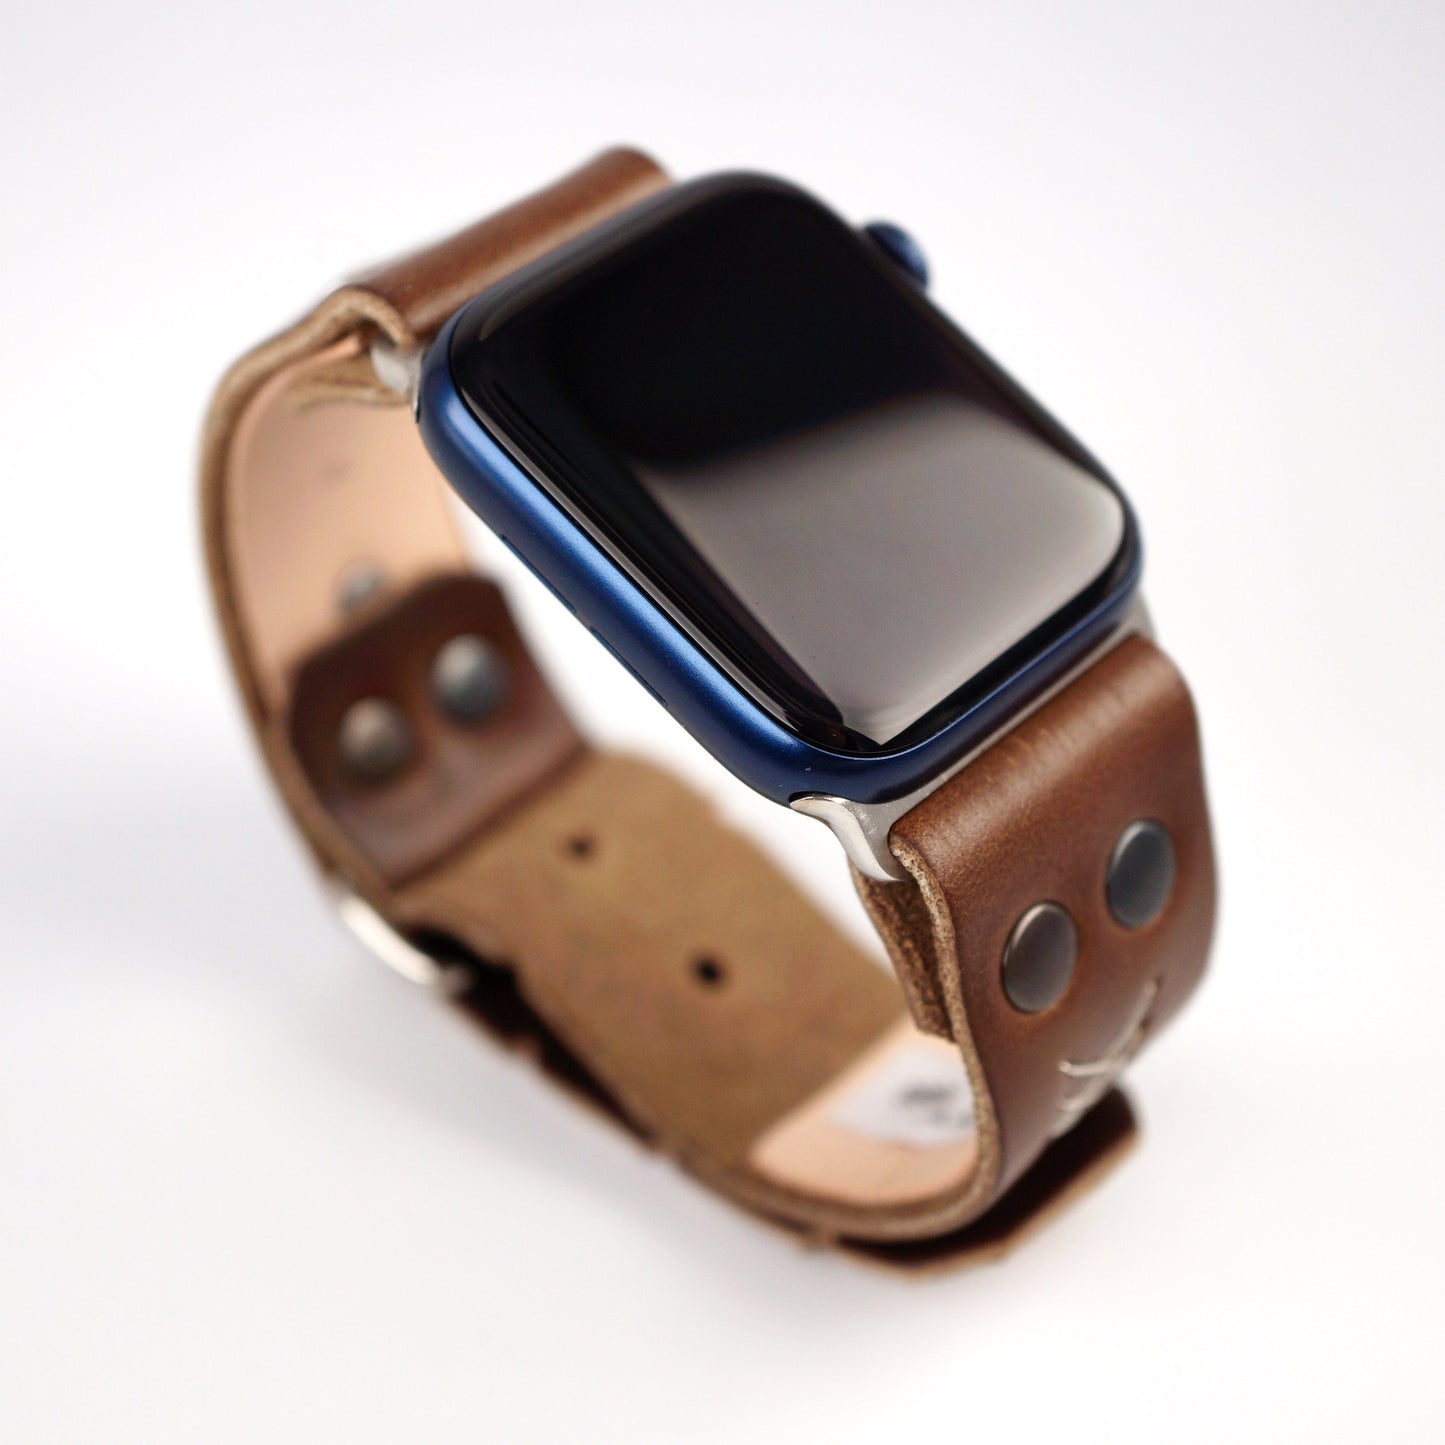 Apple Watch Band - Tarpon